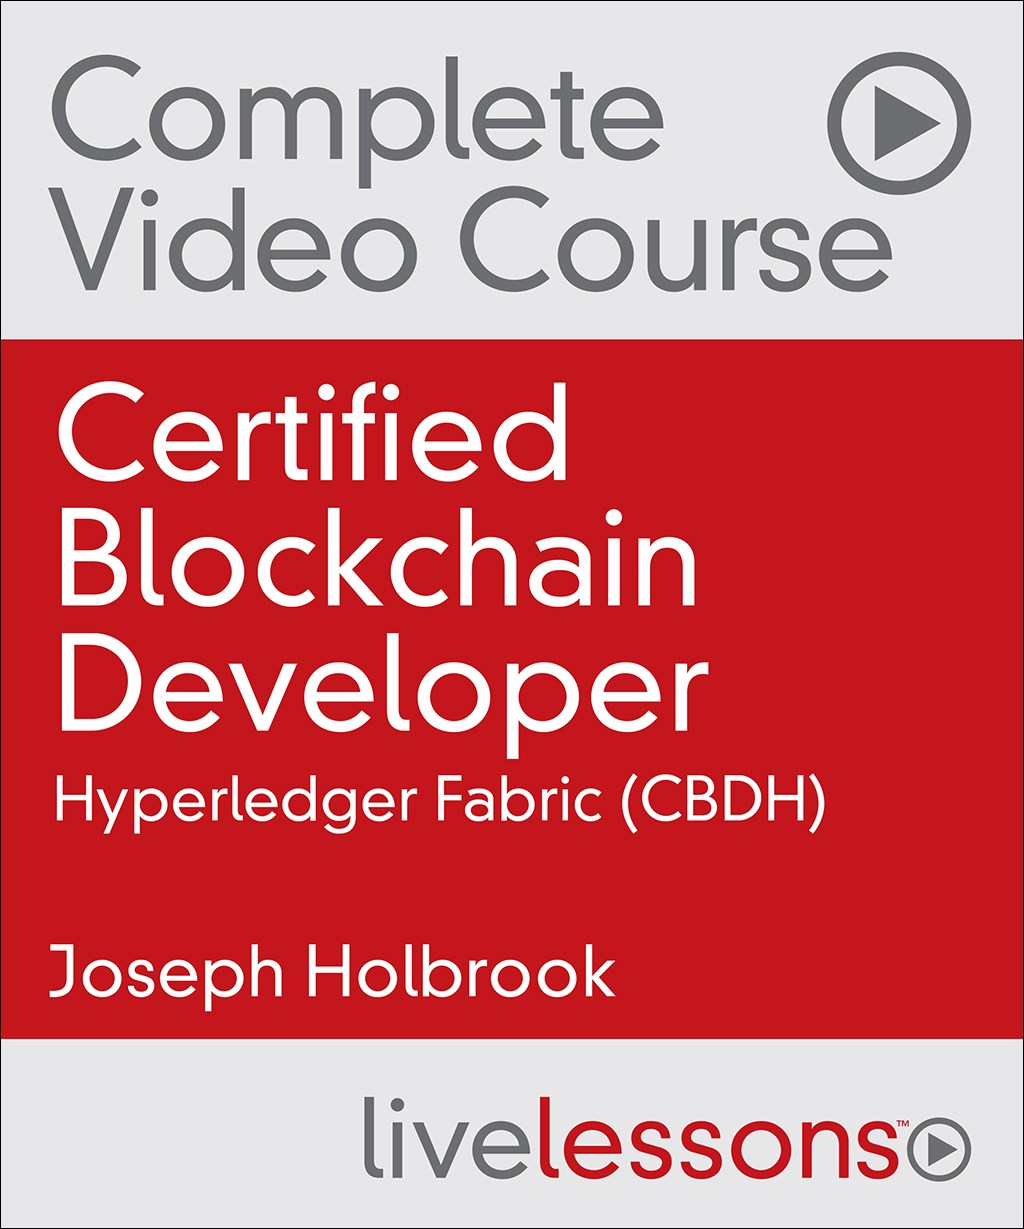 Certified Blockchain Developer - Hyperledger Fabric Complete Video Course